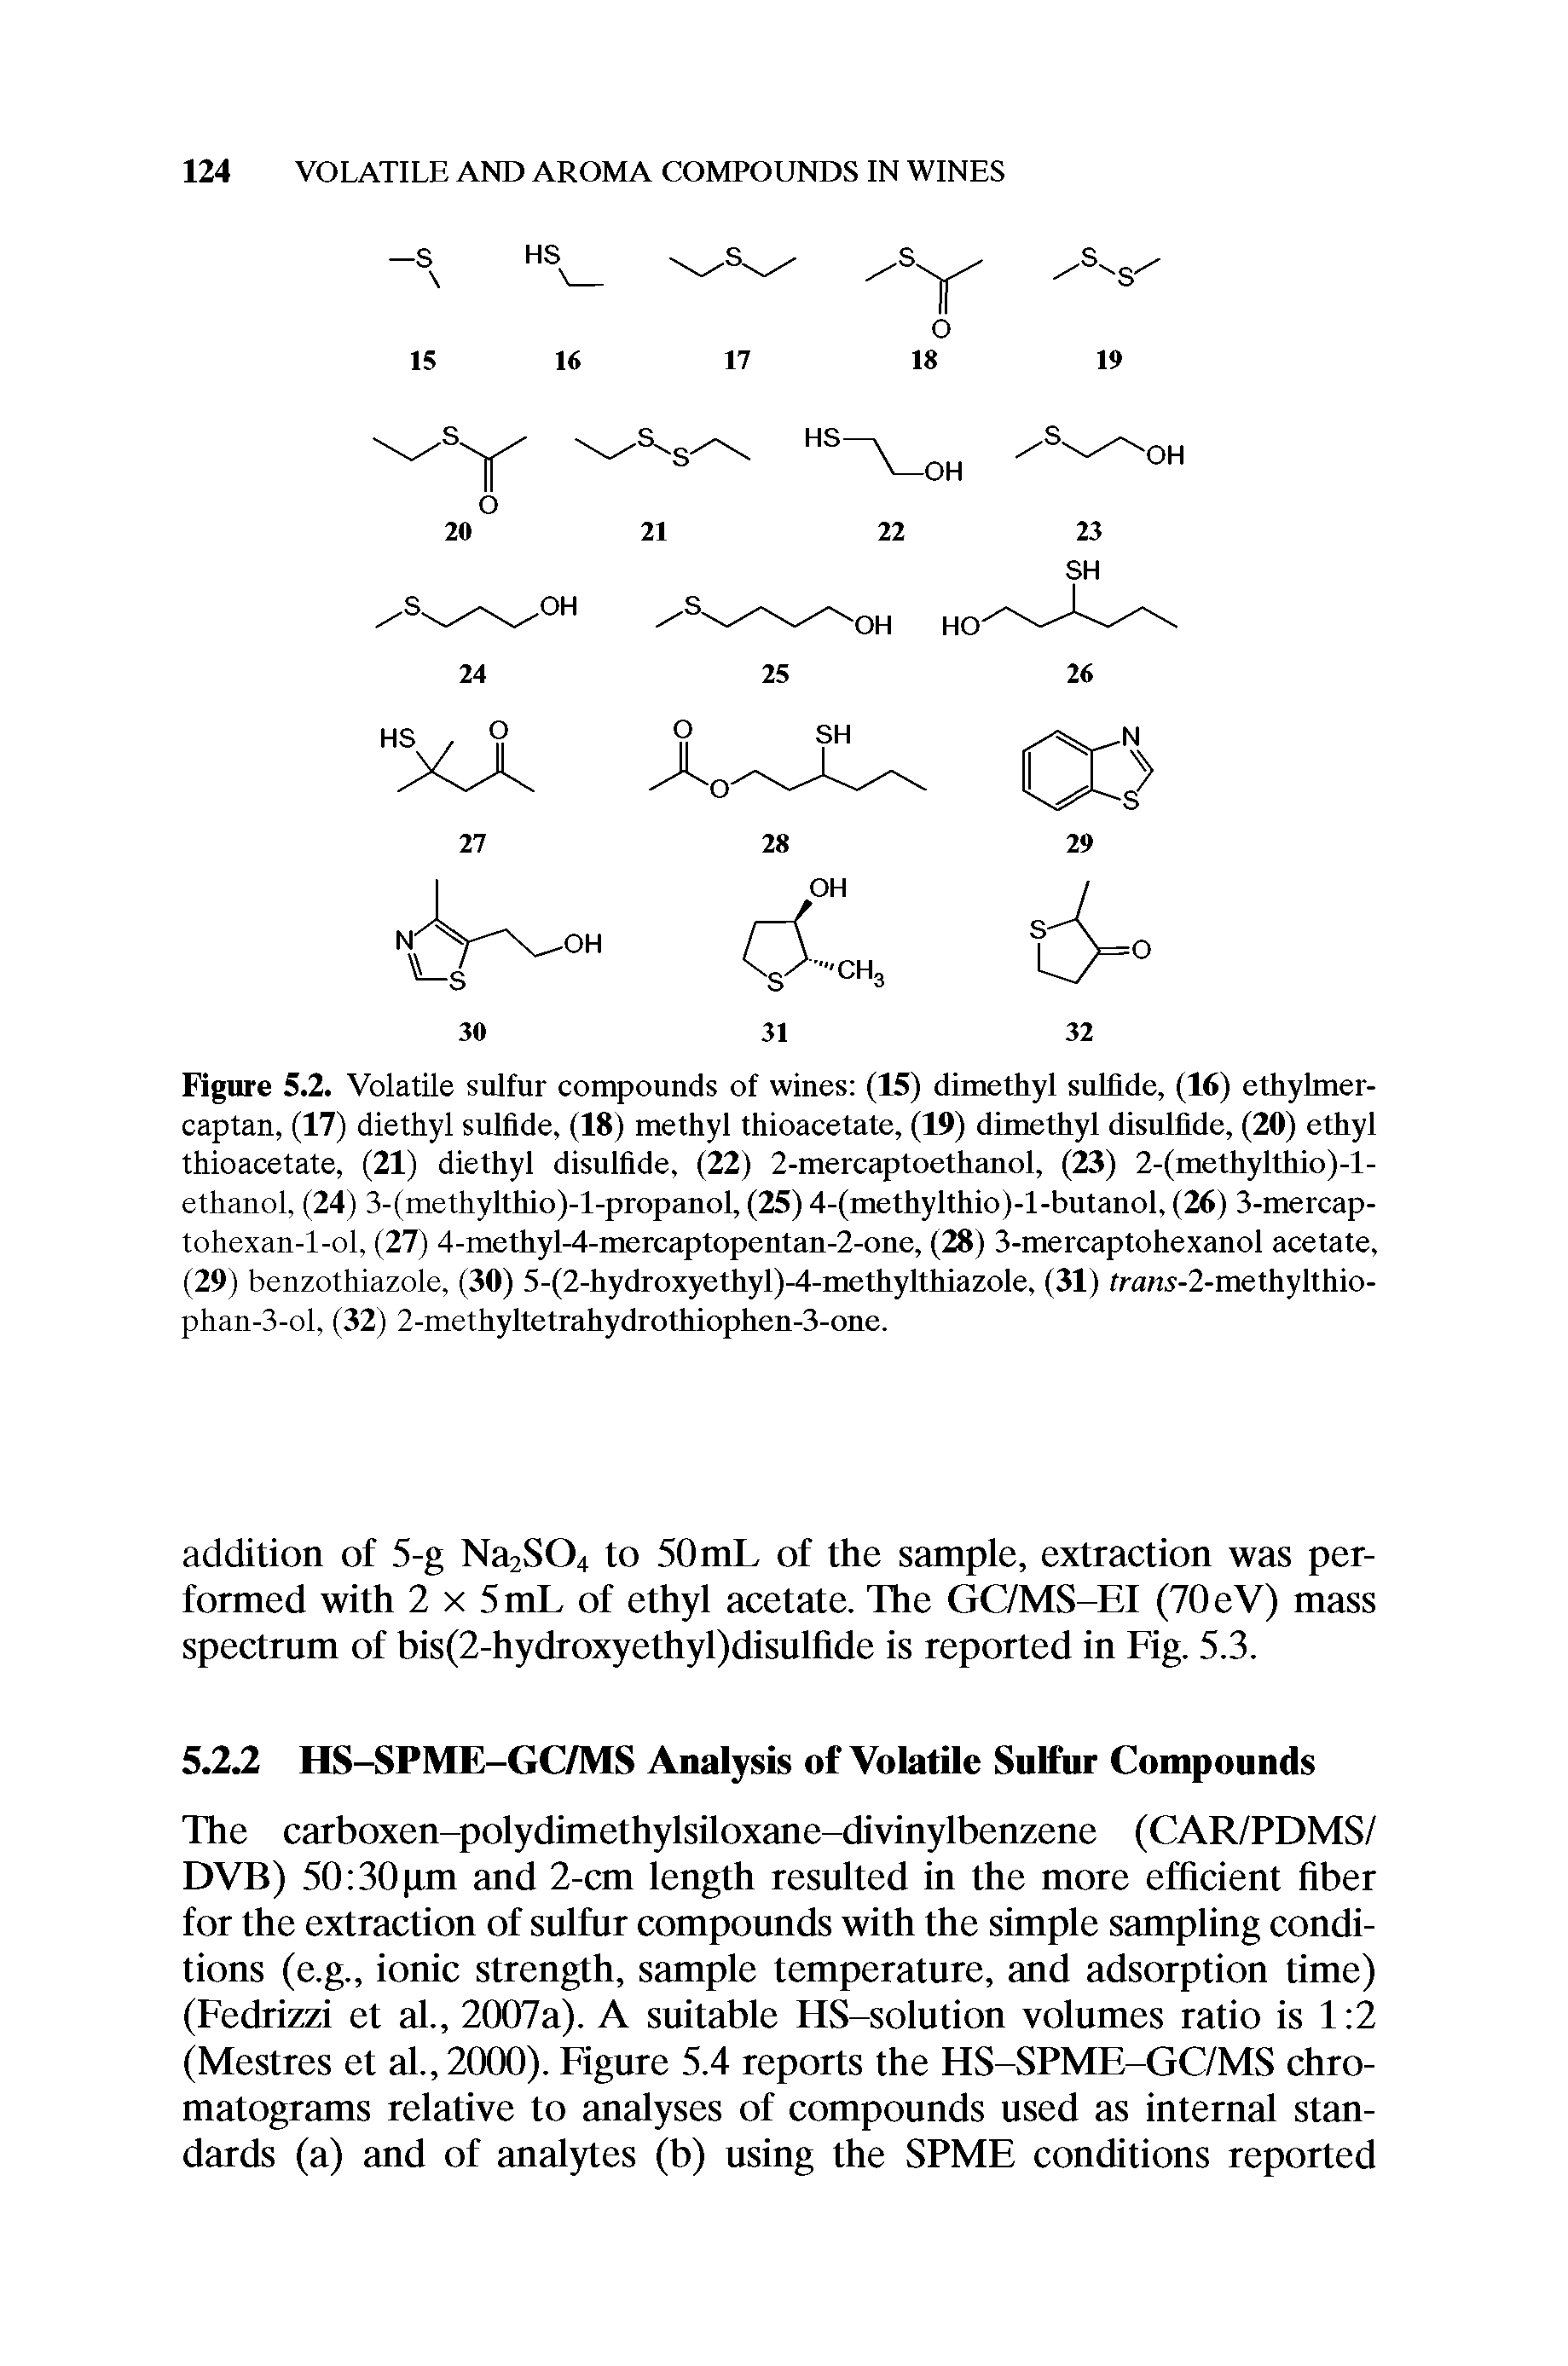 Figure 5.2. Volatile sulfur compounds of wines (15) dimethyl sulfide, (16) ethylmer-captan, (17) diethyl sulfide, (18) methyl thioacetate, (19) dimethyl disulfide, (20) ethyl thioacetate, (21) diethyl disulfide, (22) 2-mercaptoethanol, (23) 2-(methylthio)-l-ethanol, (24) 3-(methylthio)-l-propanol, (25) 4-(methylthio)-l-butanol, (26) 3-mercap-tohexan-l-ol, (27) 4-methyl-4-mercaptopentan-2-one, (28) 3-mercaptohexanol acetate, (29) benzothiazole, (30) 5-(2-hydroxyethyl)-4-methylthiazole, (31) fra s-2-methylthio-phan-3-ol, (32) 2-methyltetrahydrothiophen-3-one.